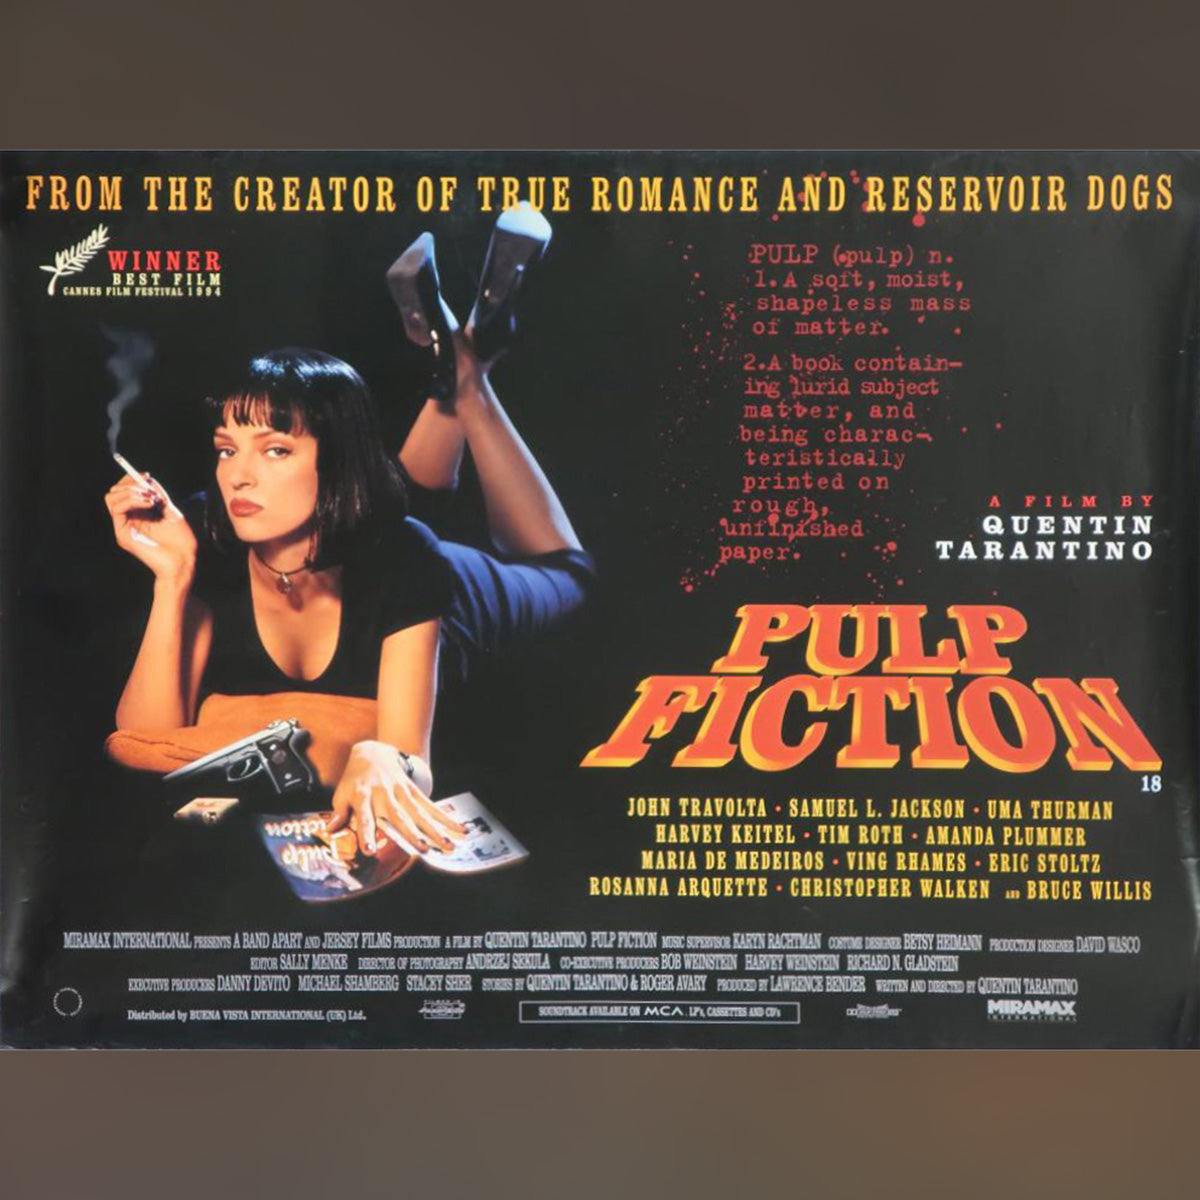 Original Movie Poster of Pulp Fiction (1994)